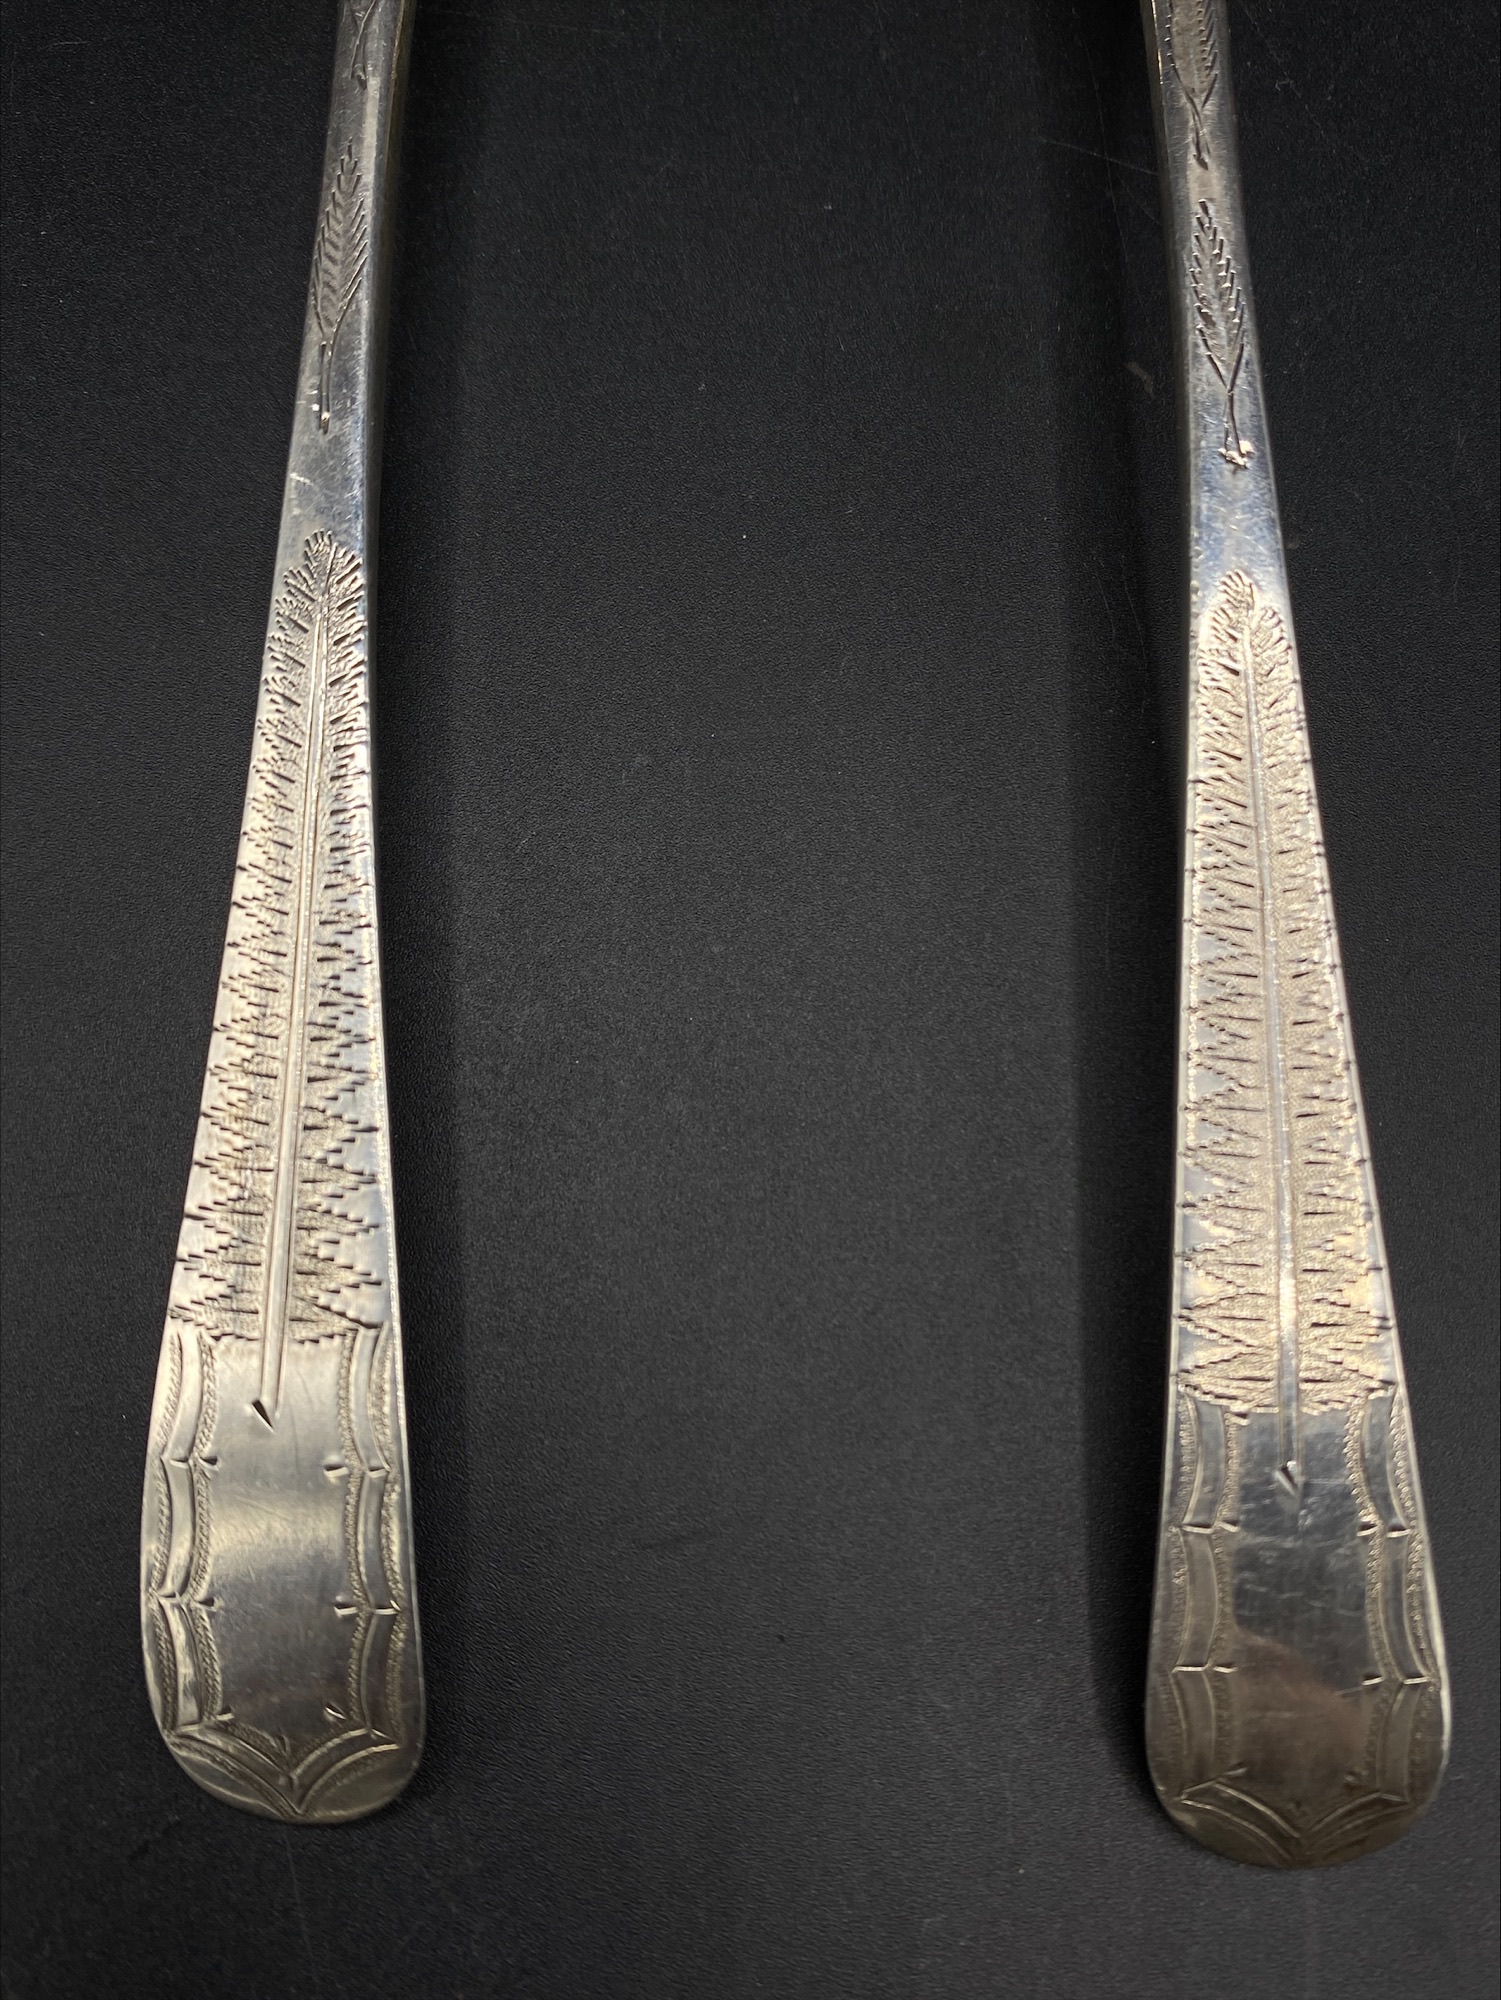 Pair of George III compote spoons - Image 5 of 5